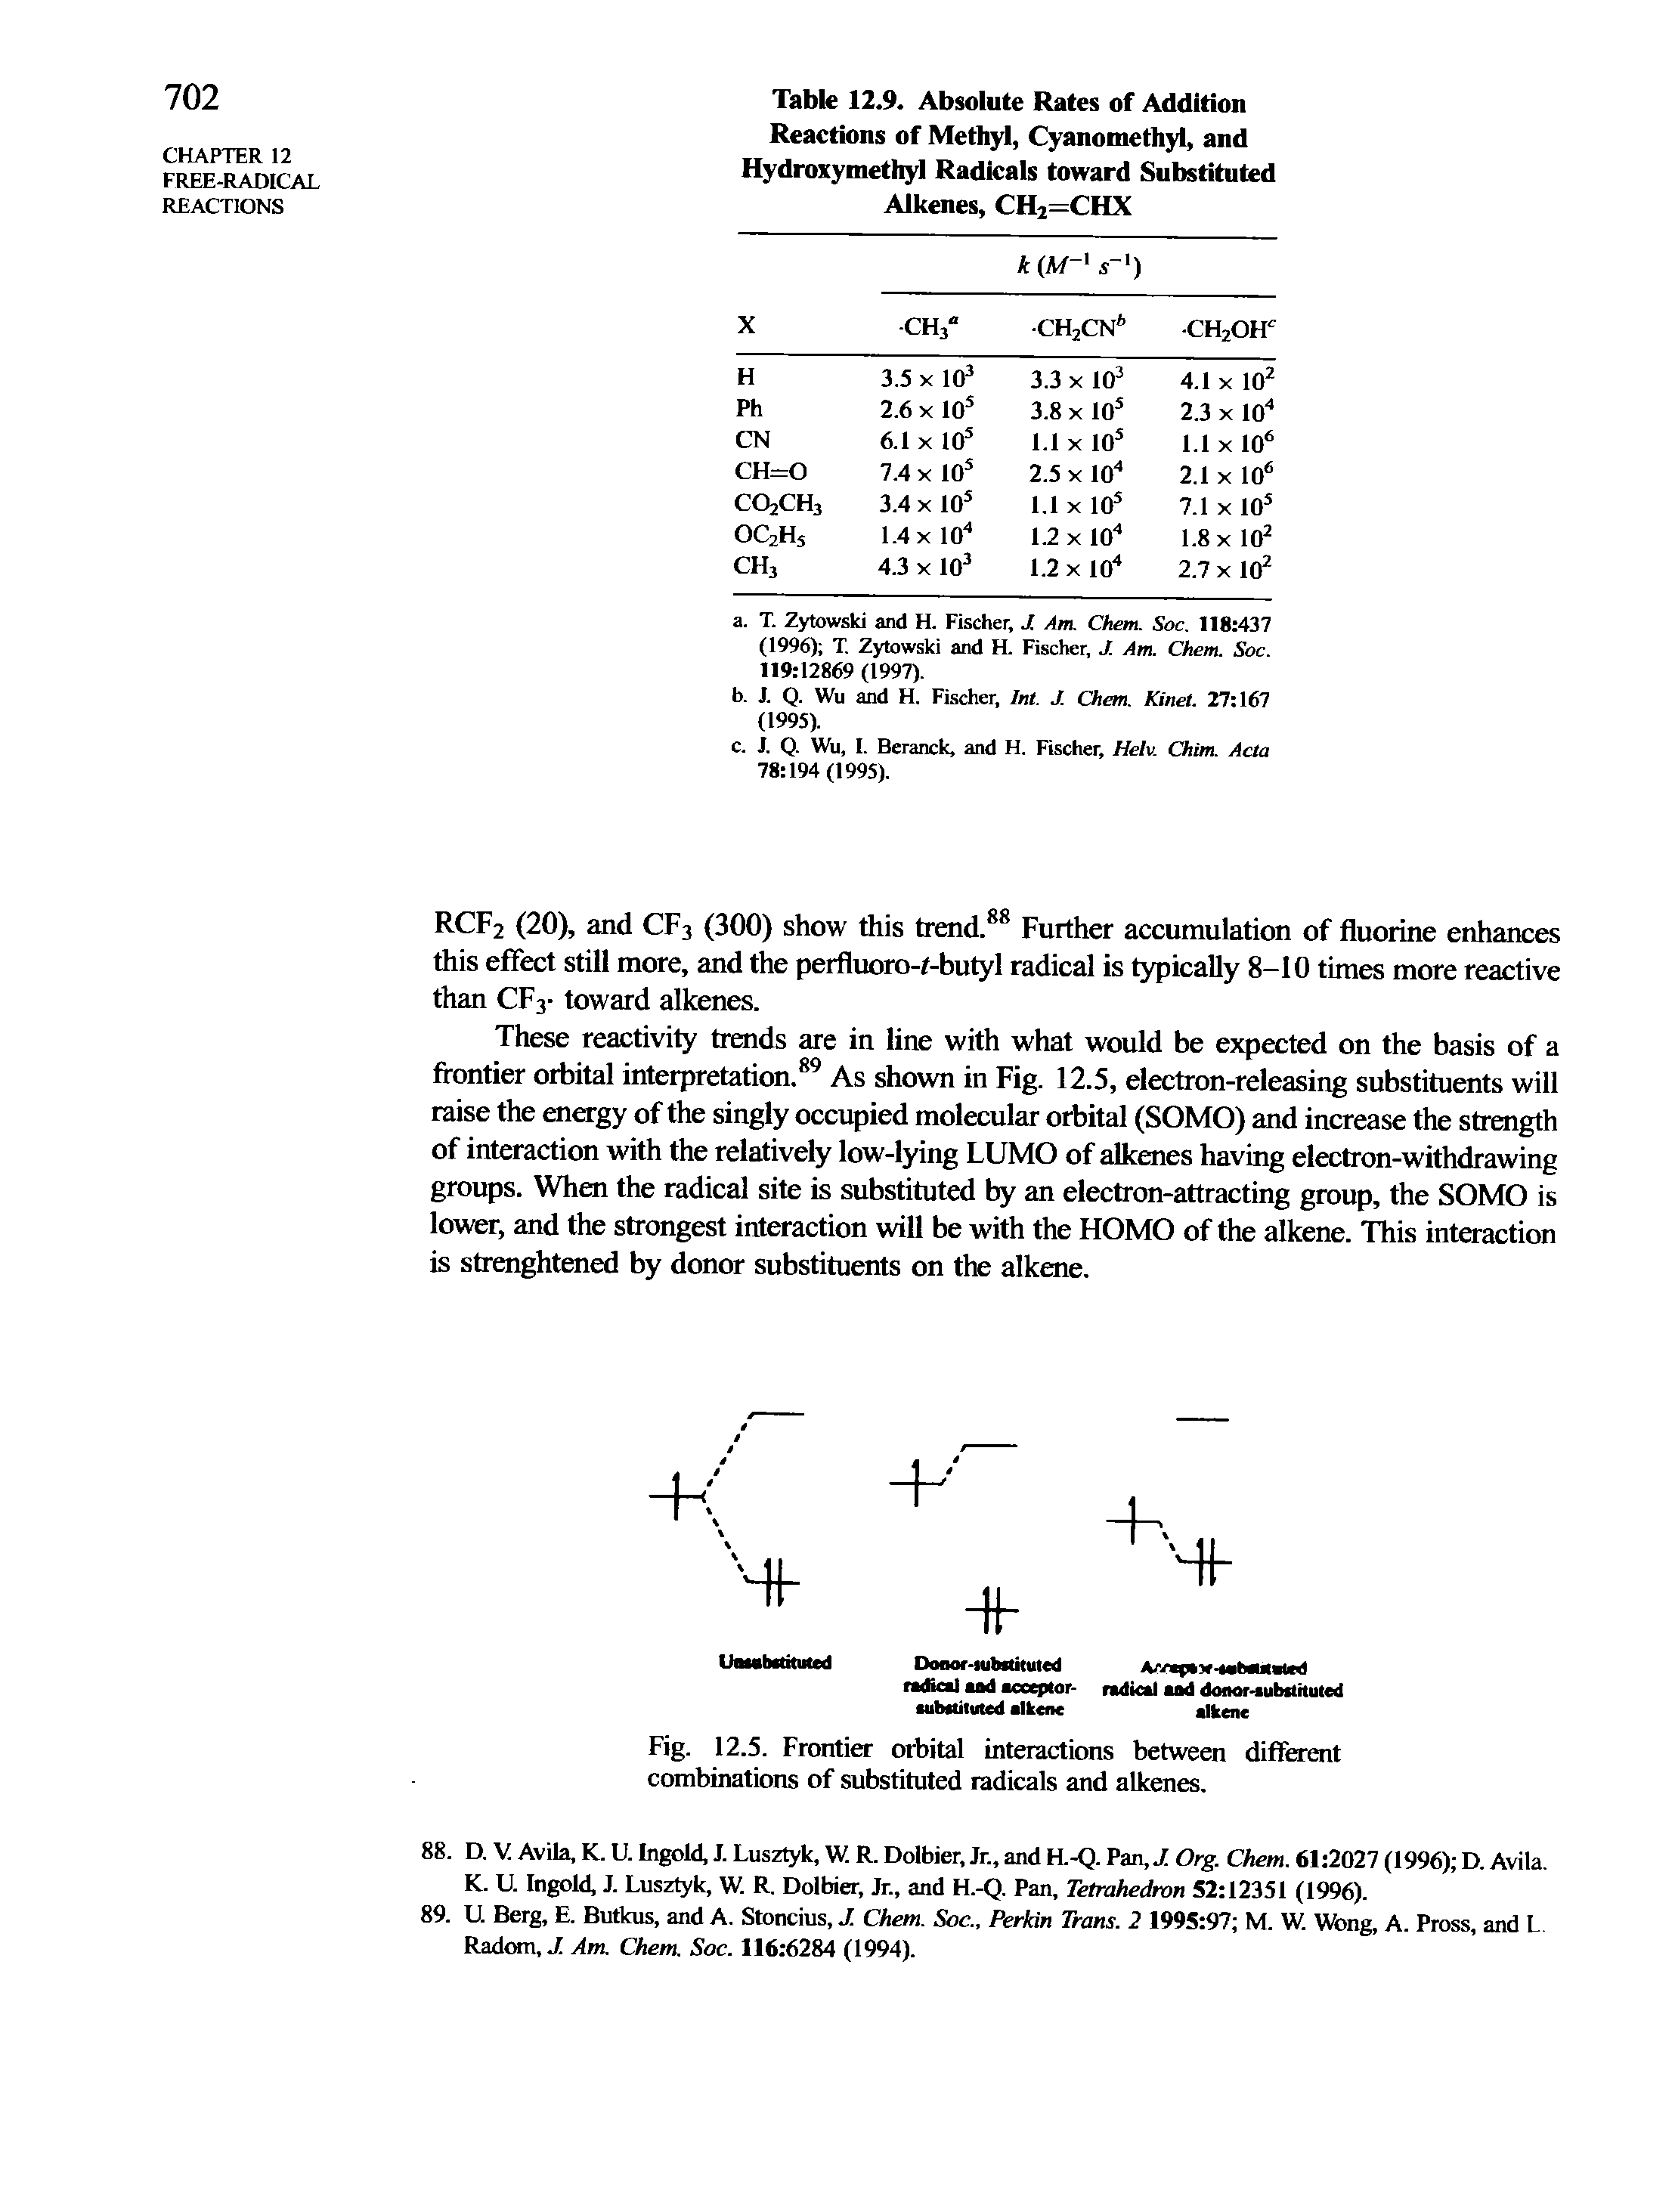 Fig. 12.5. Frontier orbital interactions between different combinations of substituted radicals and aikenes.